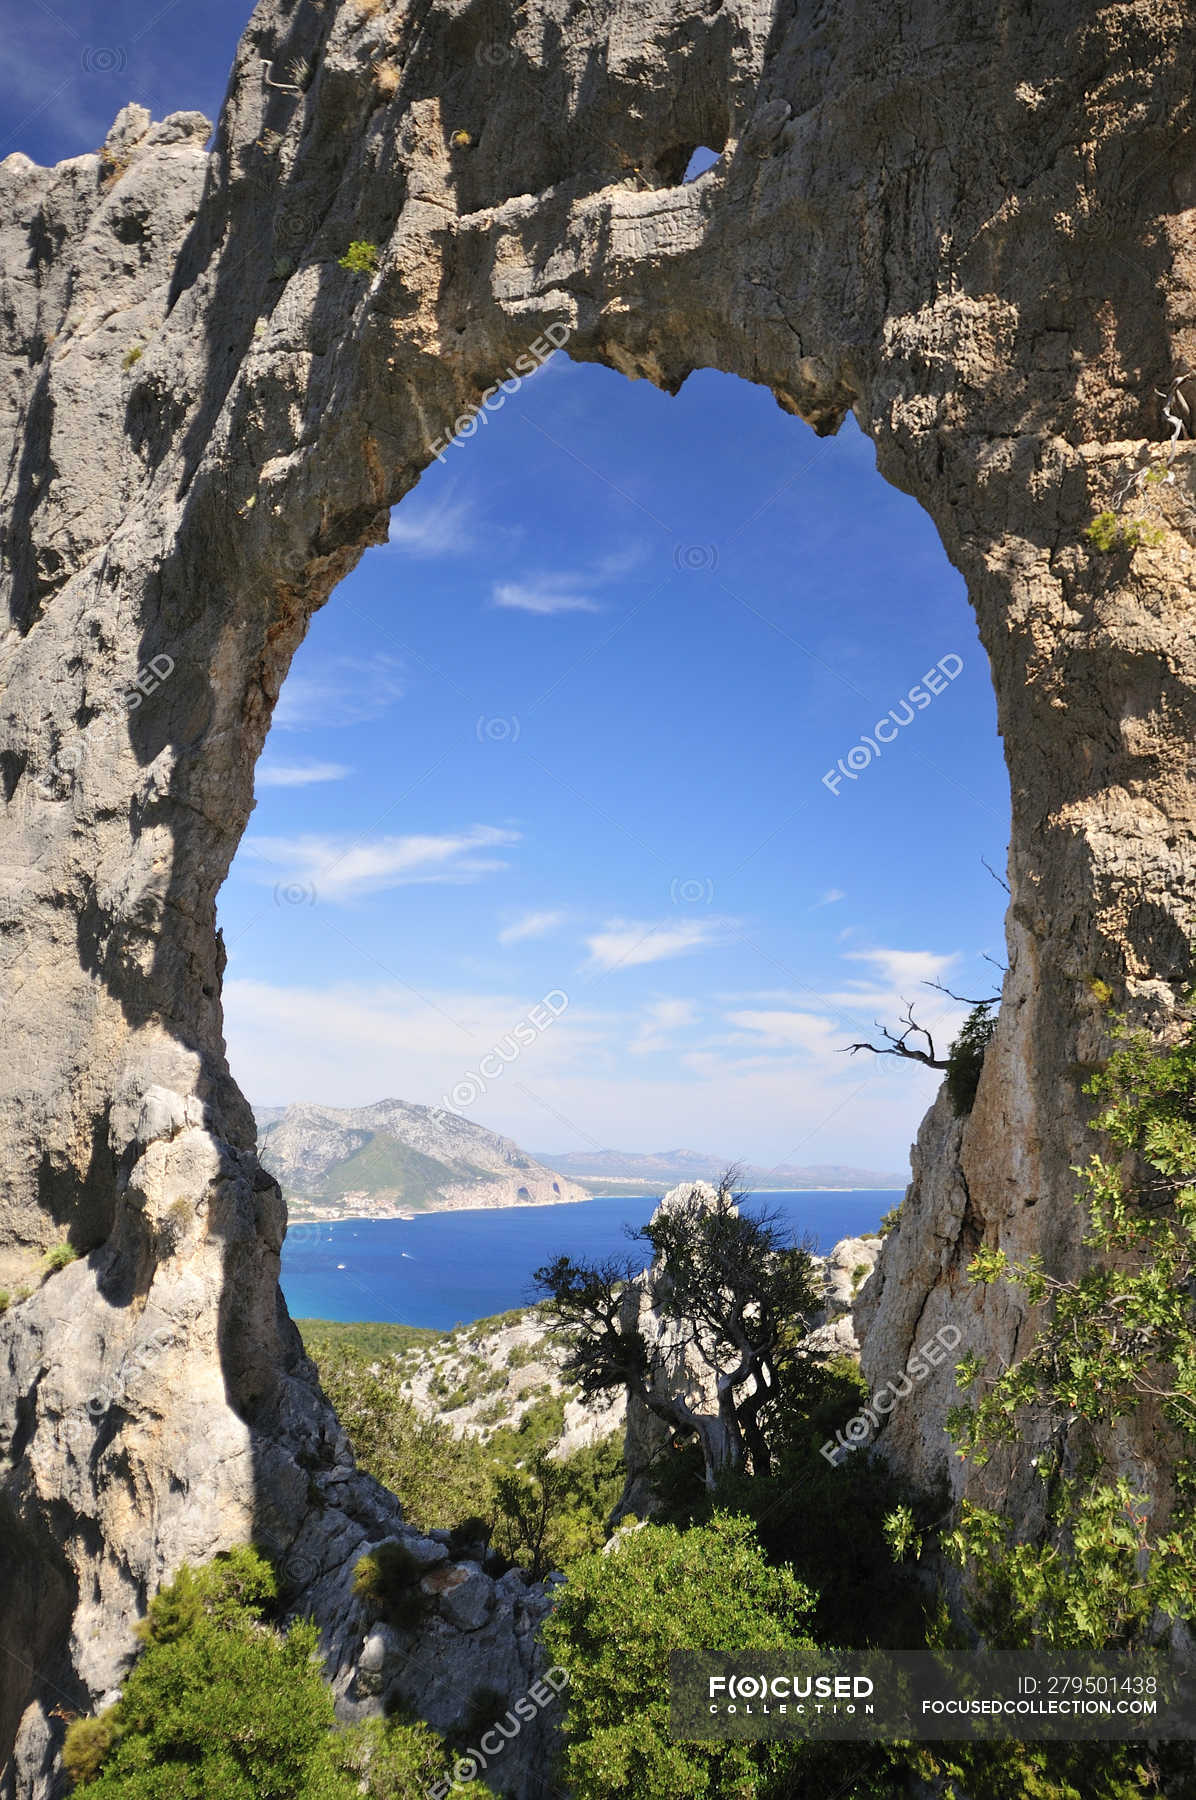 From Lupiru Rocks Arc Overlooking The Gulf Of Orosei Coast Of Baunei Ogliastra Sardinia Italy Europe Natural Light Mediterranean Sea Stock Photo